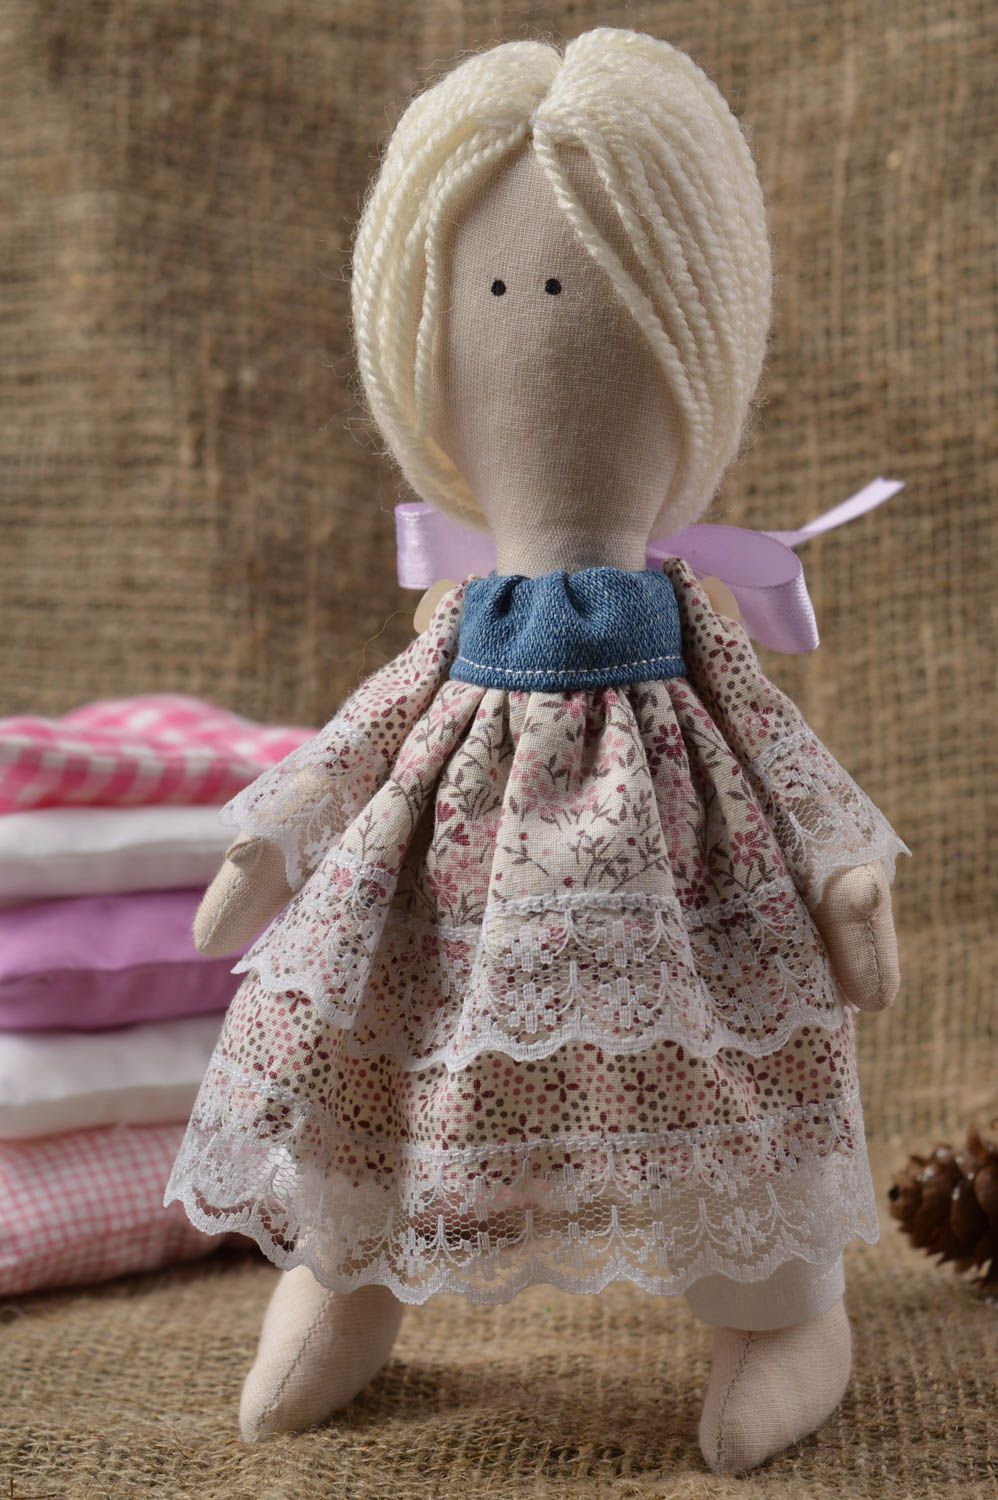 Handmade doll designer doll unusual doll gift ideas decor ideas home decor photo 1